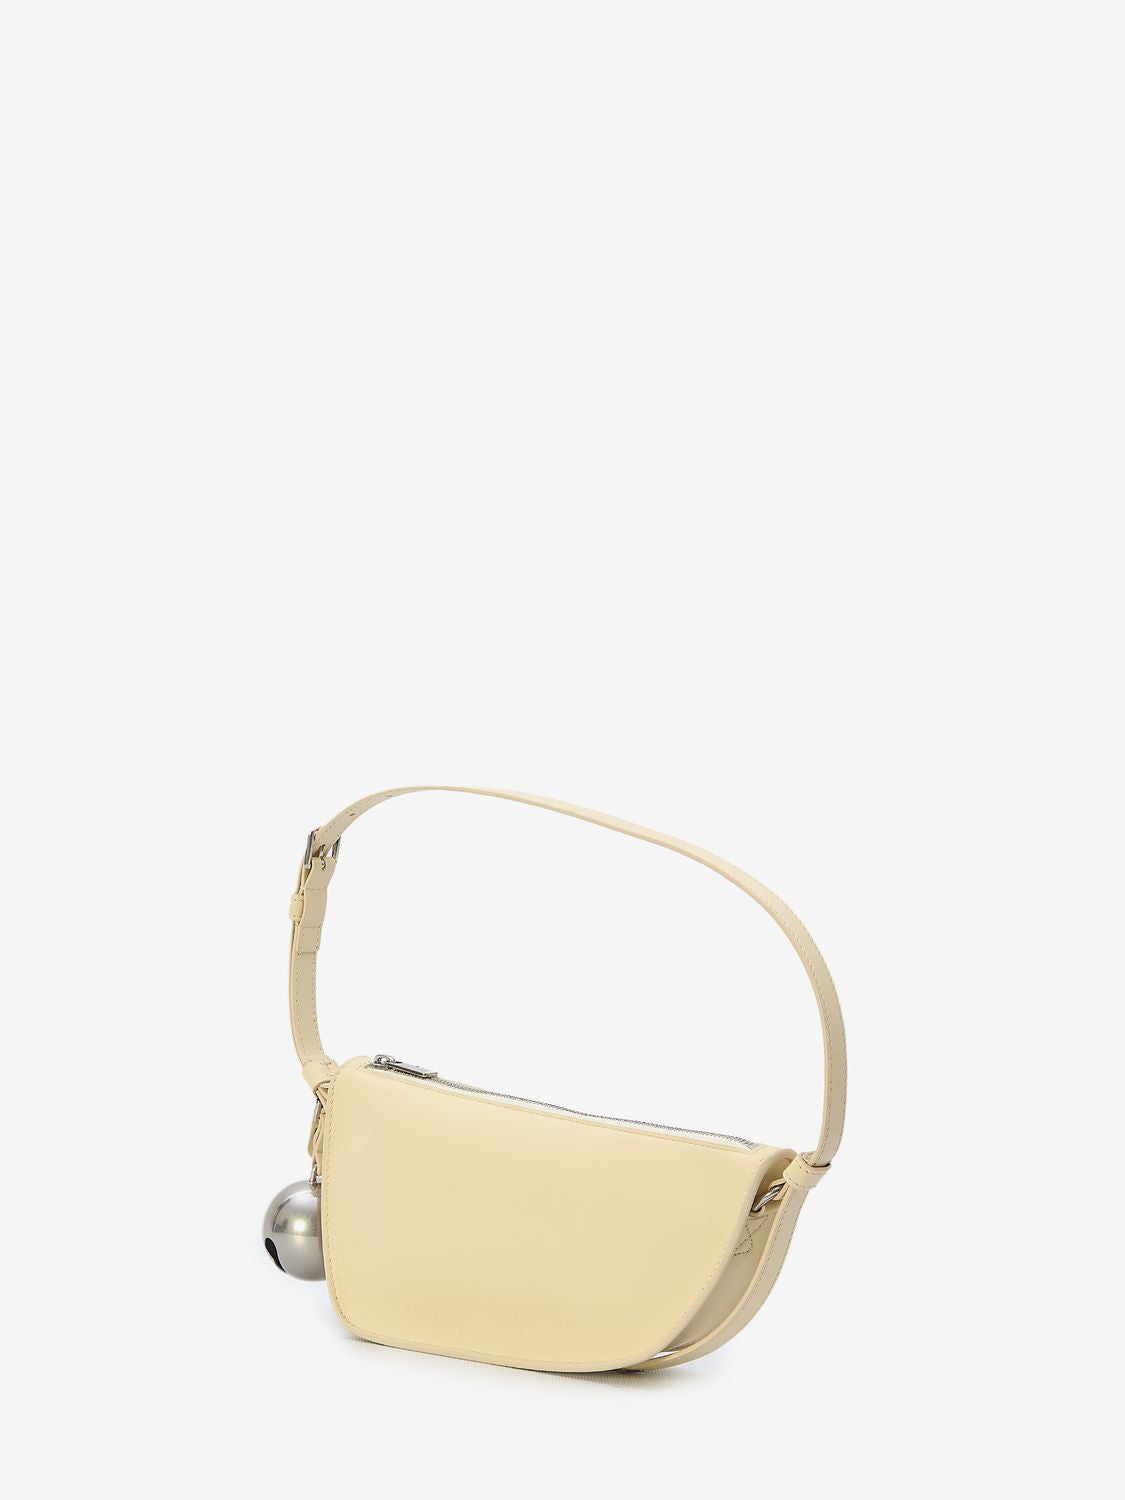 Shield Shoulder Handbag in Mixed Colors